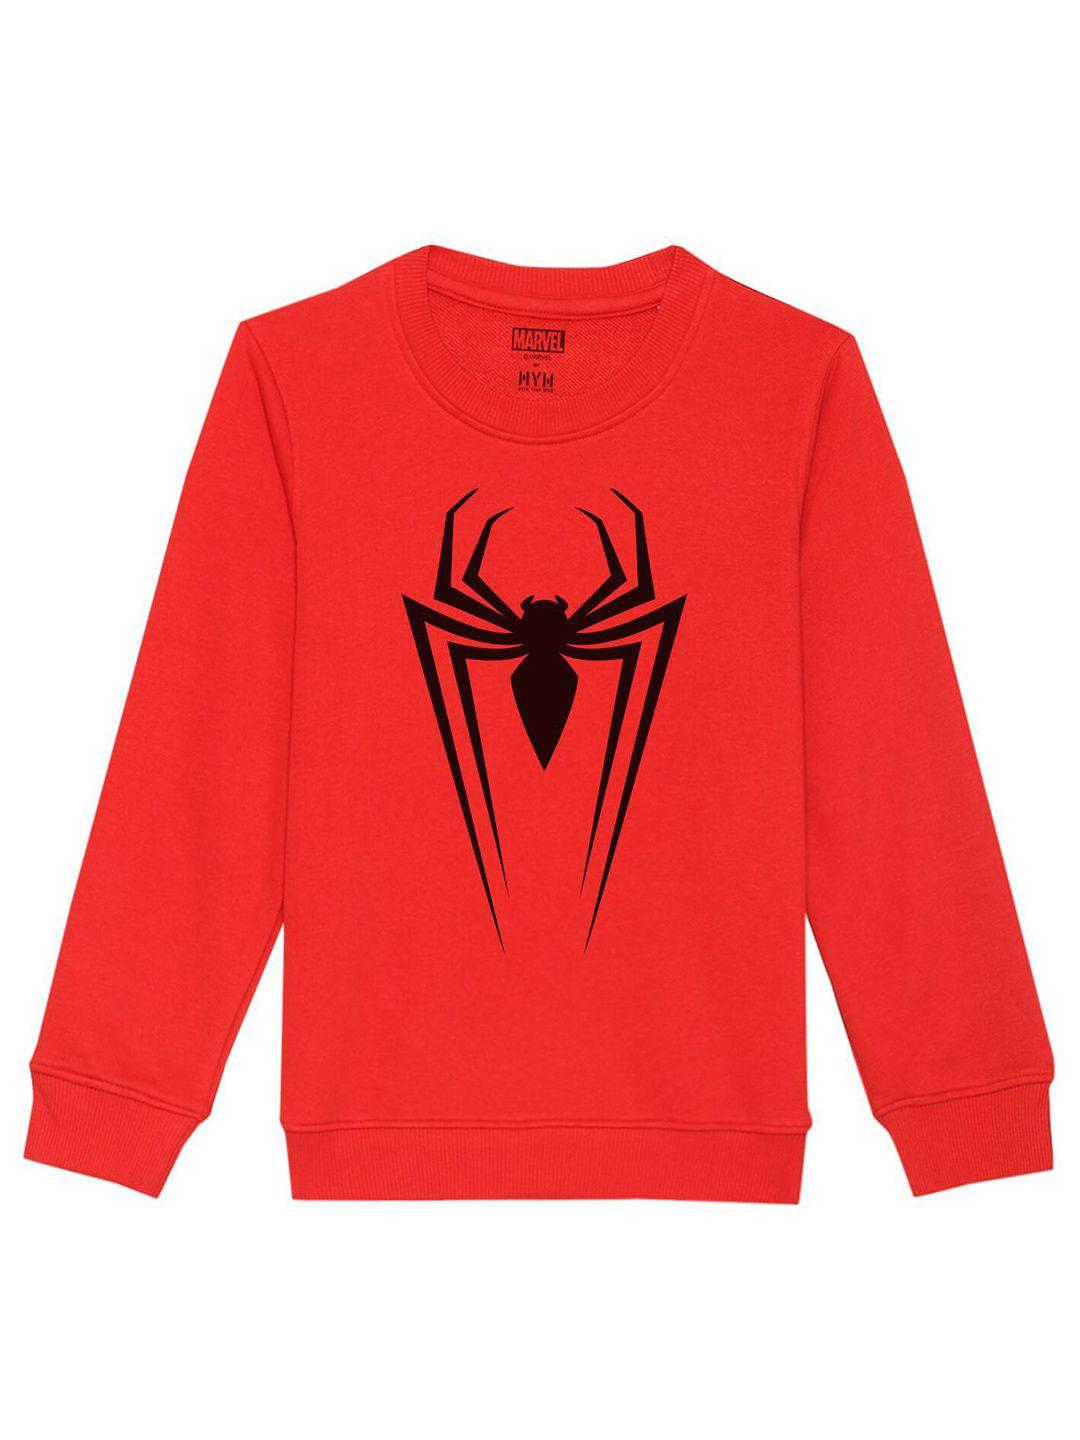 marvel-by-wear-your-mind-unisex-kids-red-printed-sweatshirt